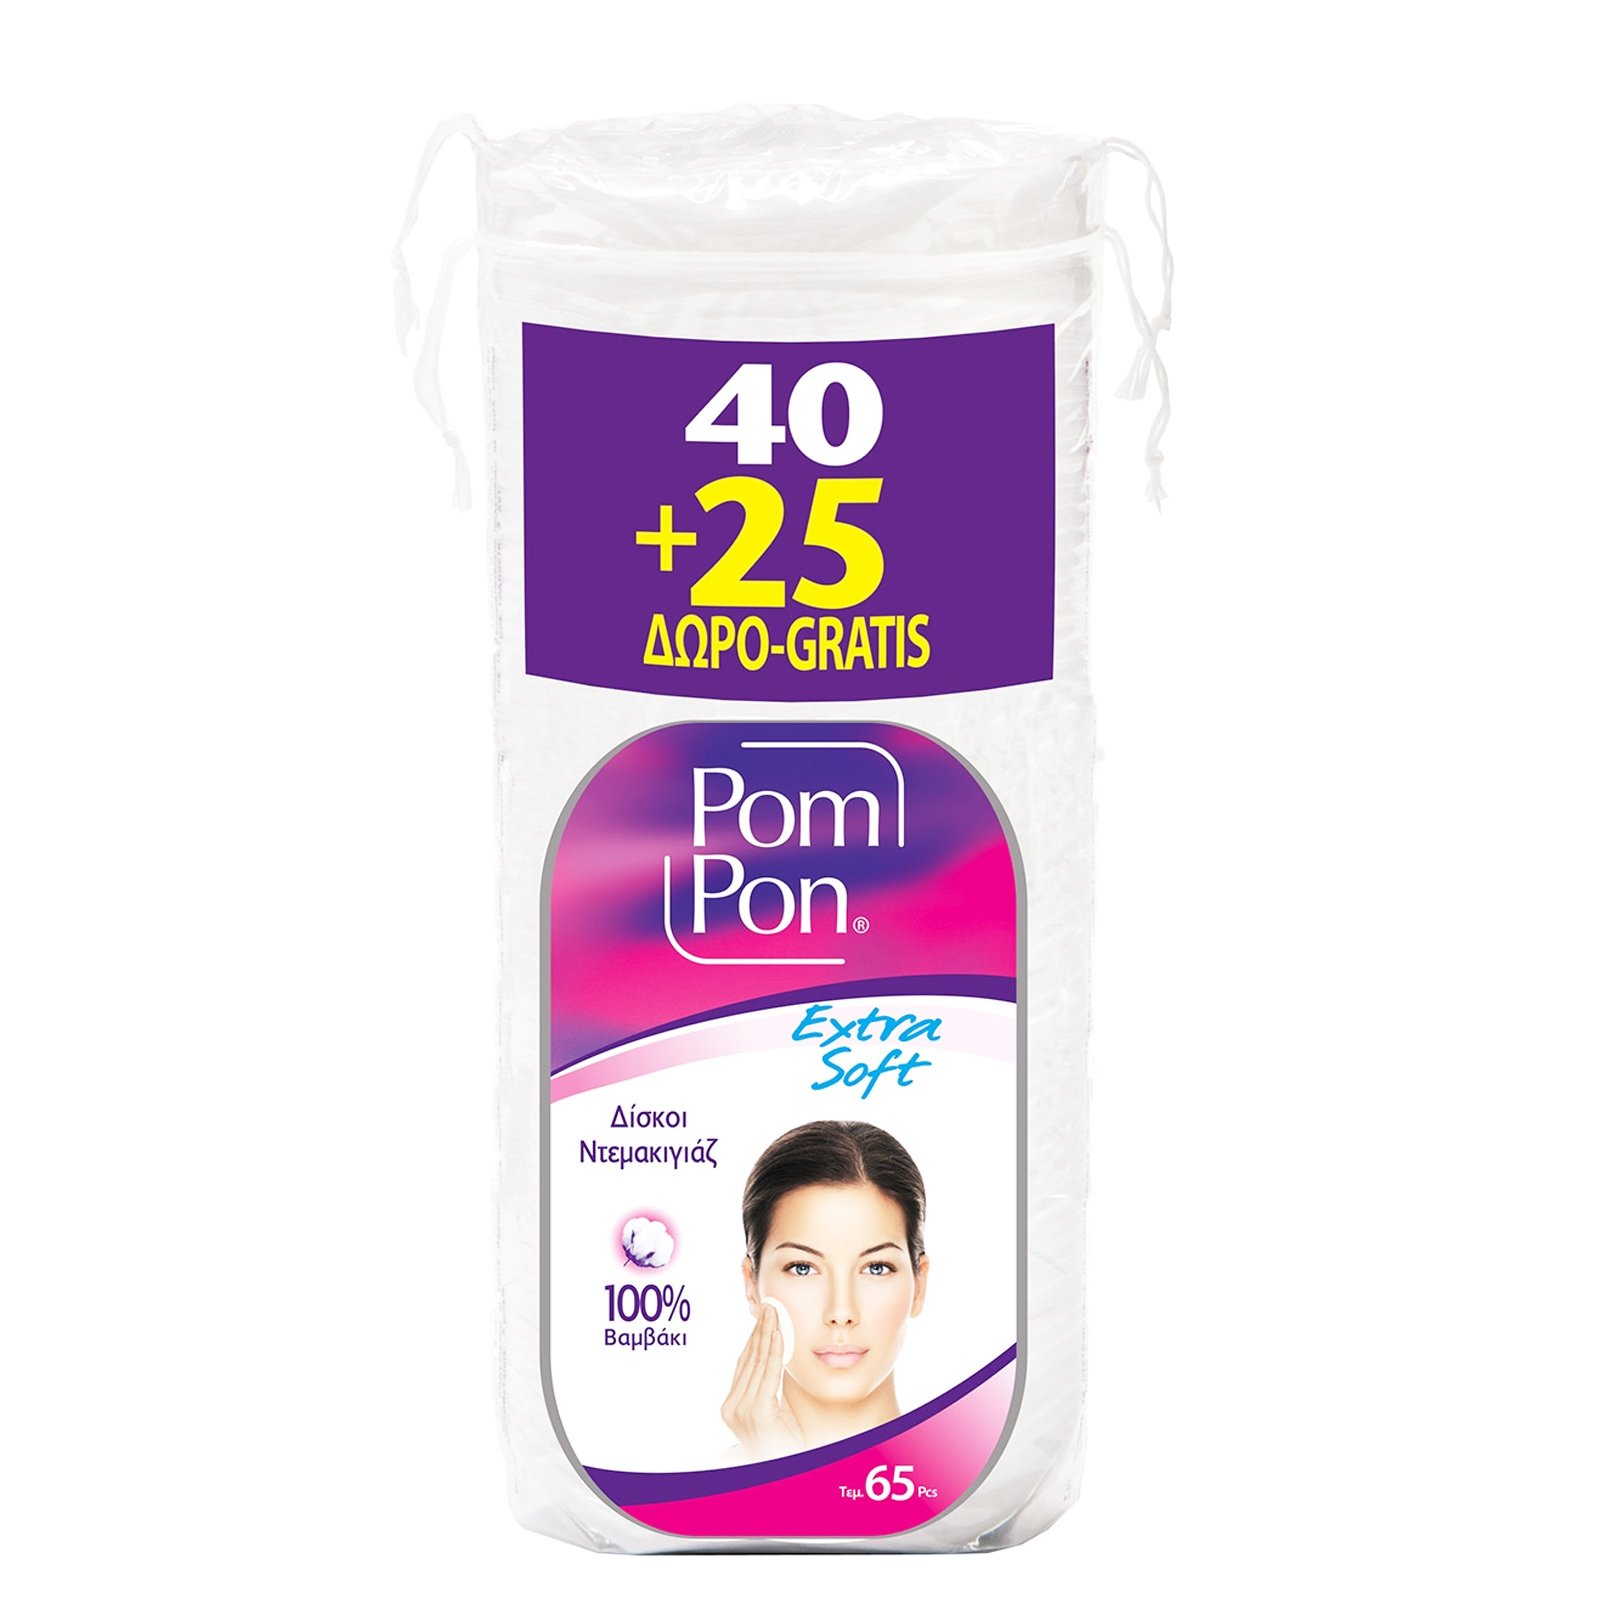 Pom Pon Cotton Pads Extra Soft Δίσκοι Ντεμακιγιάζ 100% Βαμβάκι σε Οβάλ Σχήμα, 40Τεμάχια + 25Τεμάχια Δώρο